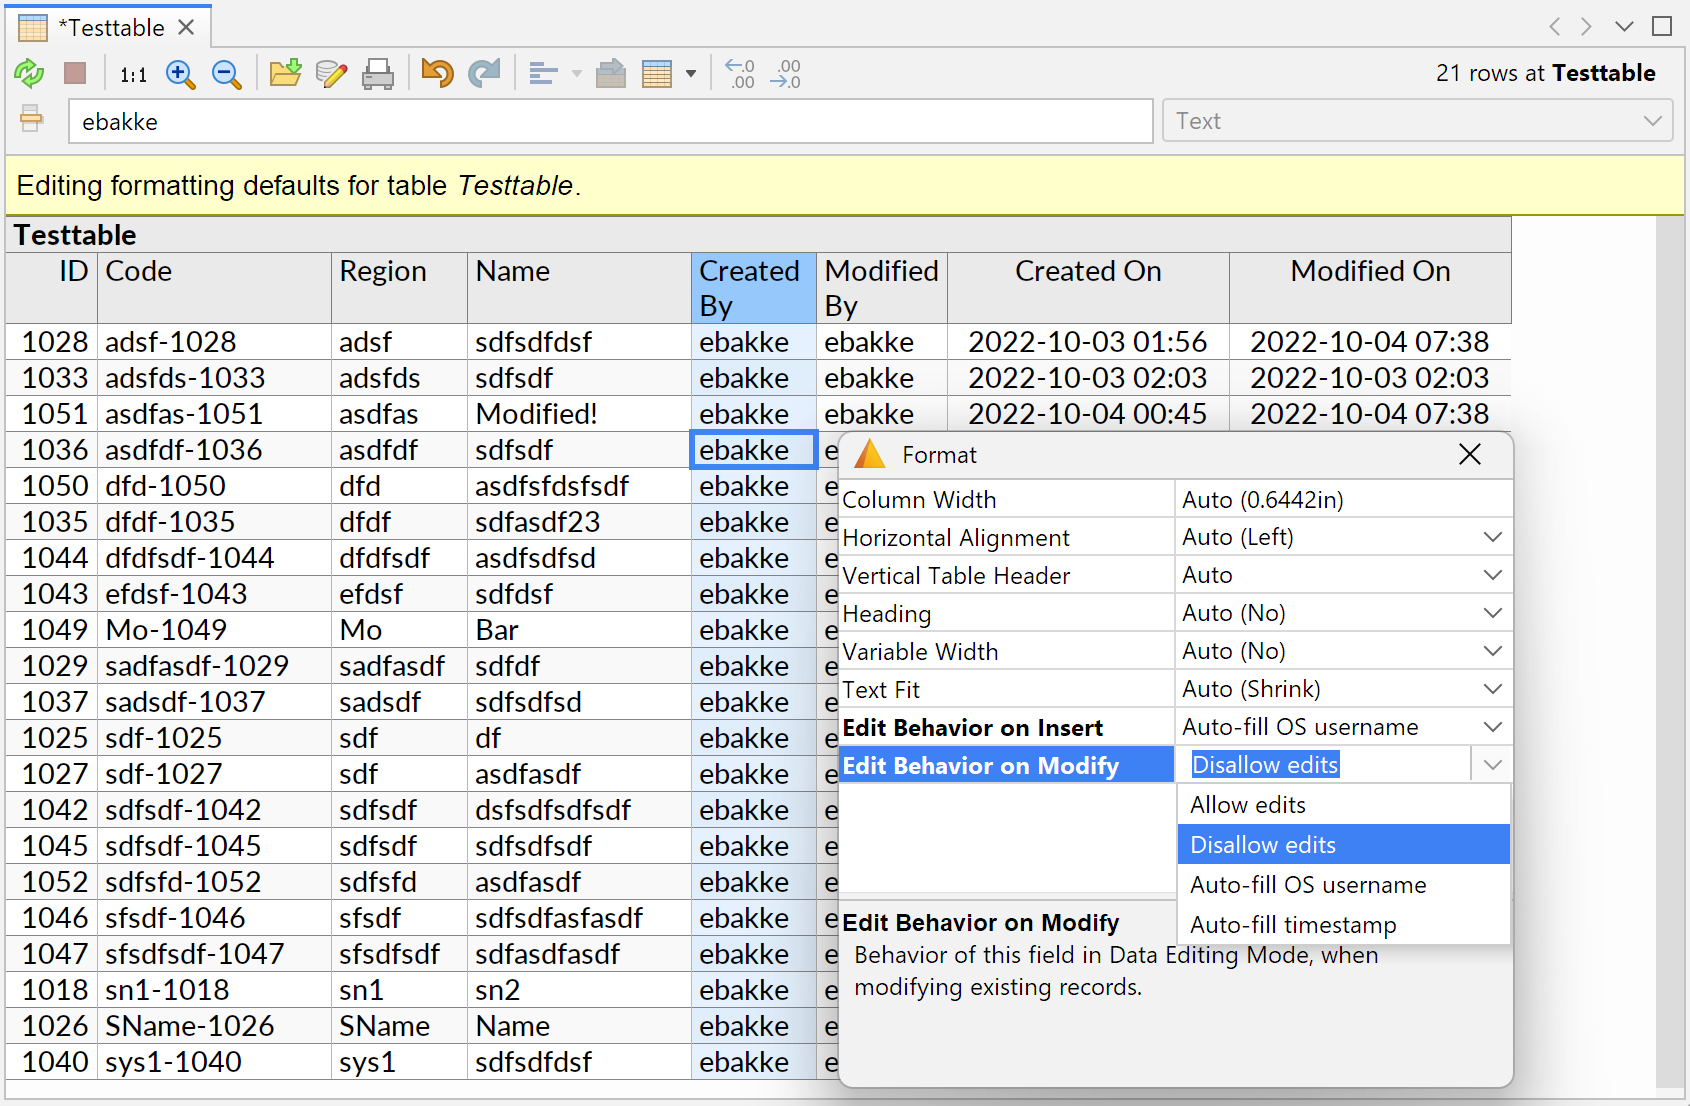 Screenshot showing the Edit Behavior properties being edited